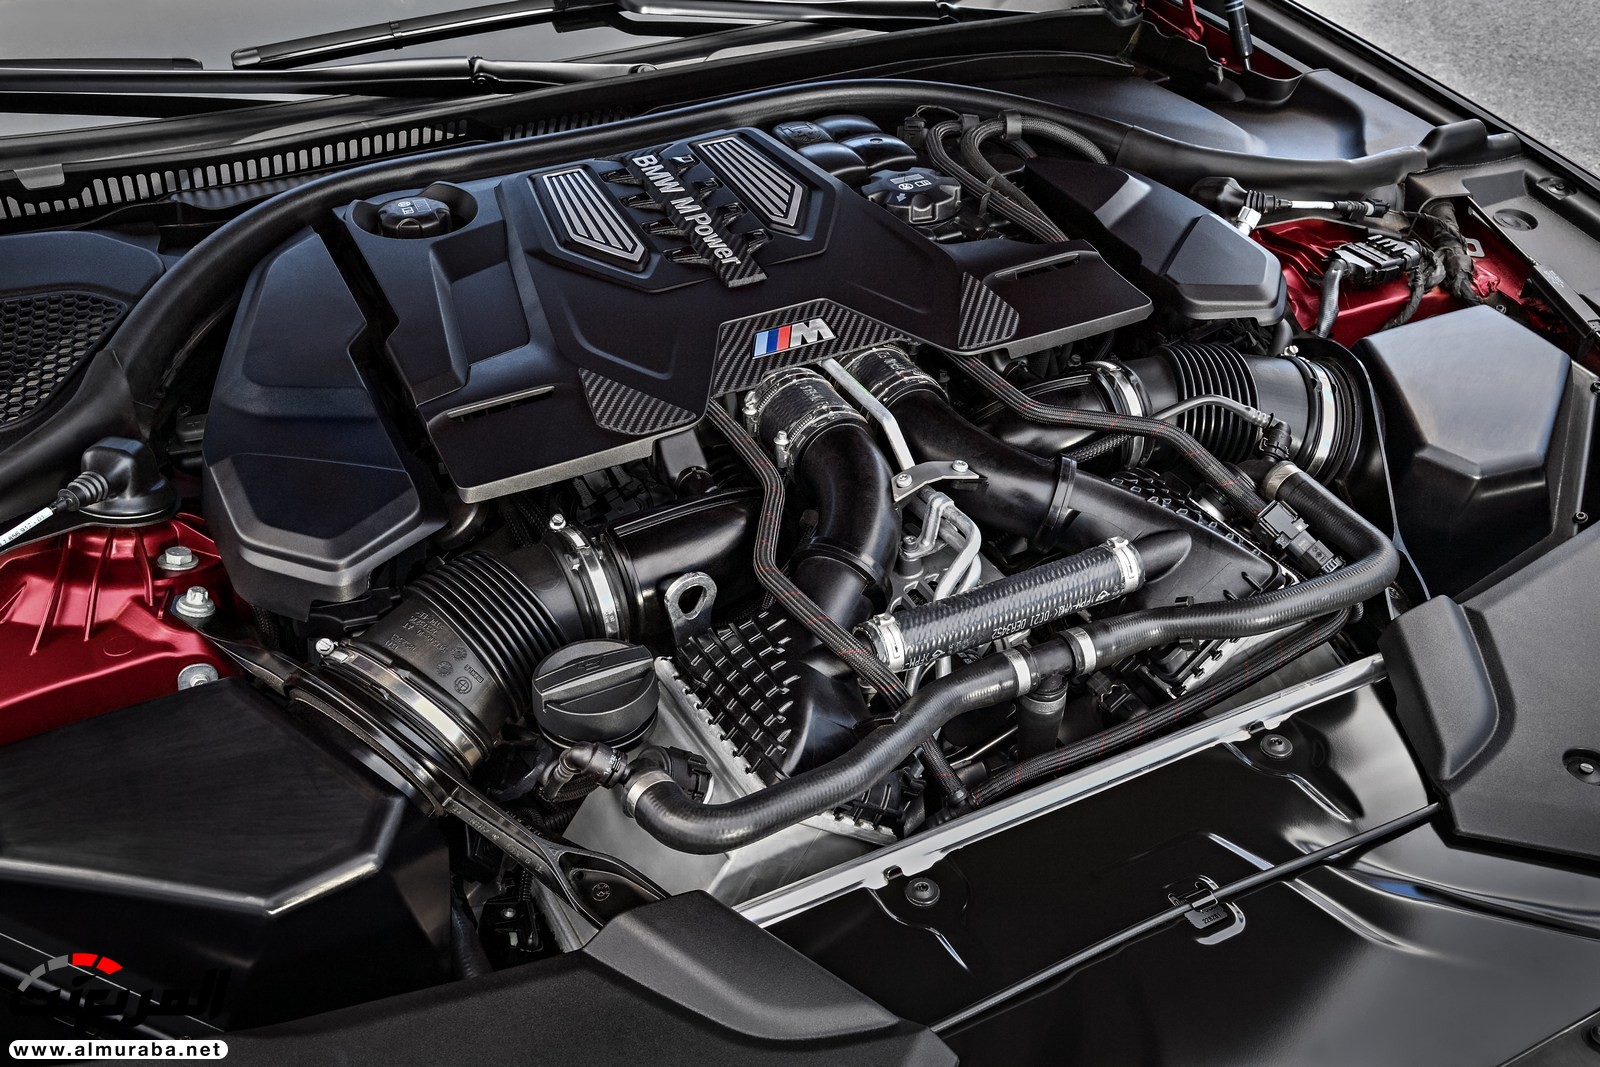 بي ام دبليو M5 2018 تكشف نفسها رسمياً بقوة ٦٠٠ حصان "صور ومواصفات" BMW 48